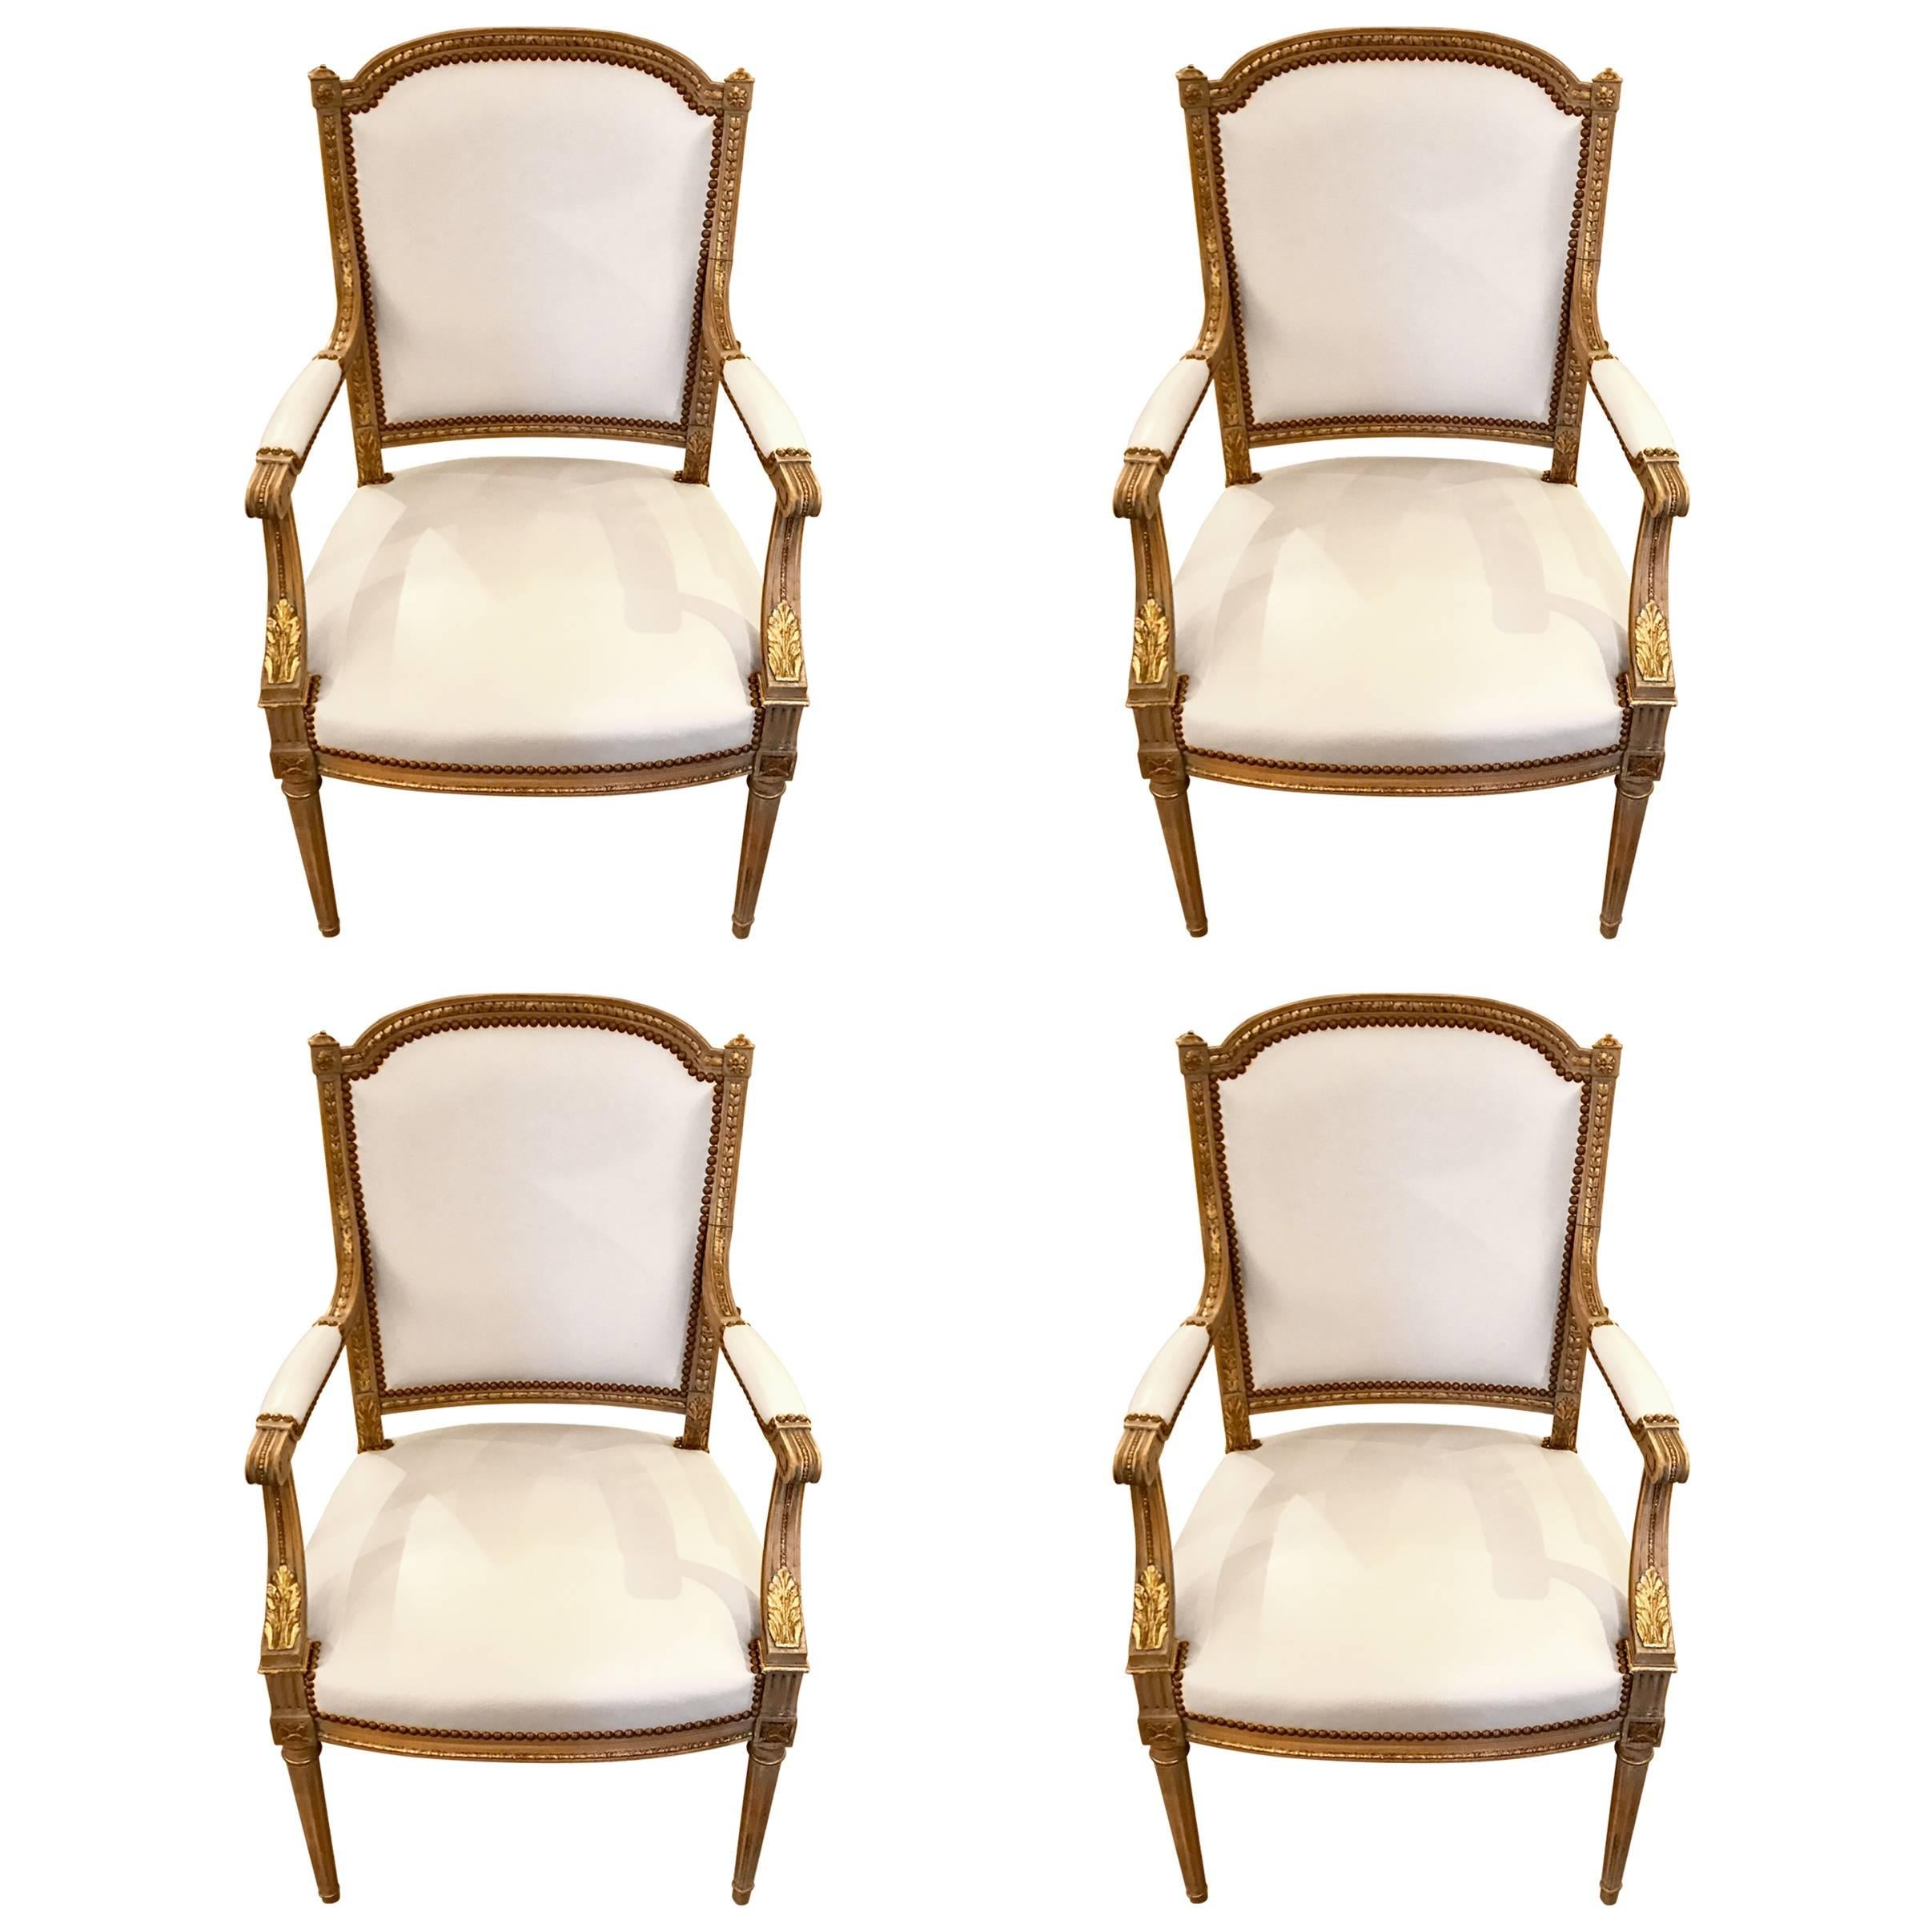 Four Maison Jansen Louis XVI Cream Leather Upholstered Parcel-Gilt Armchairs